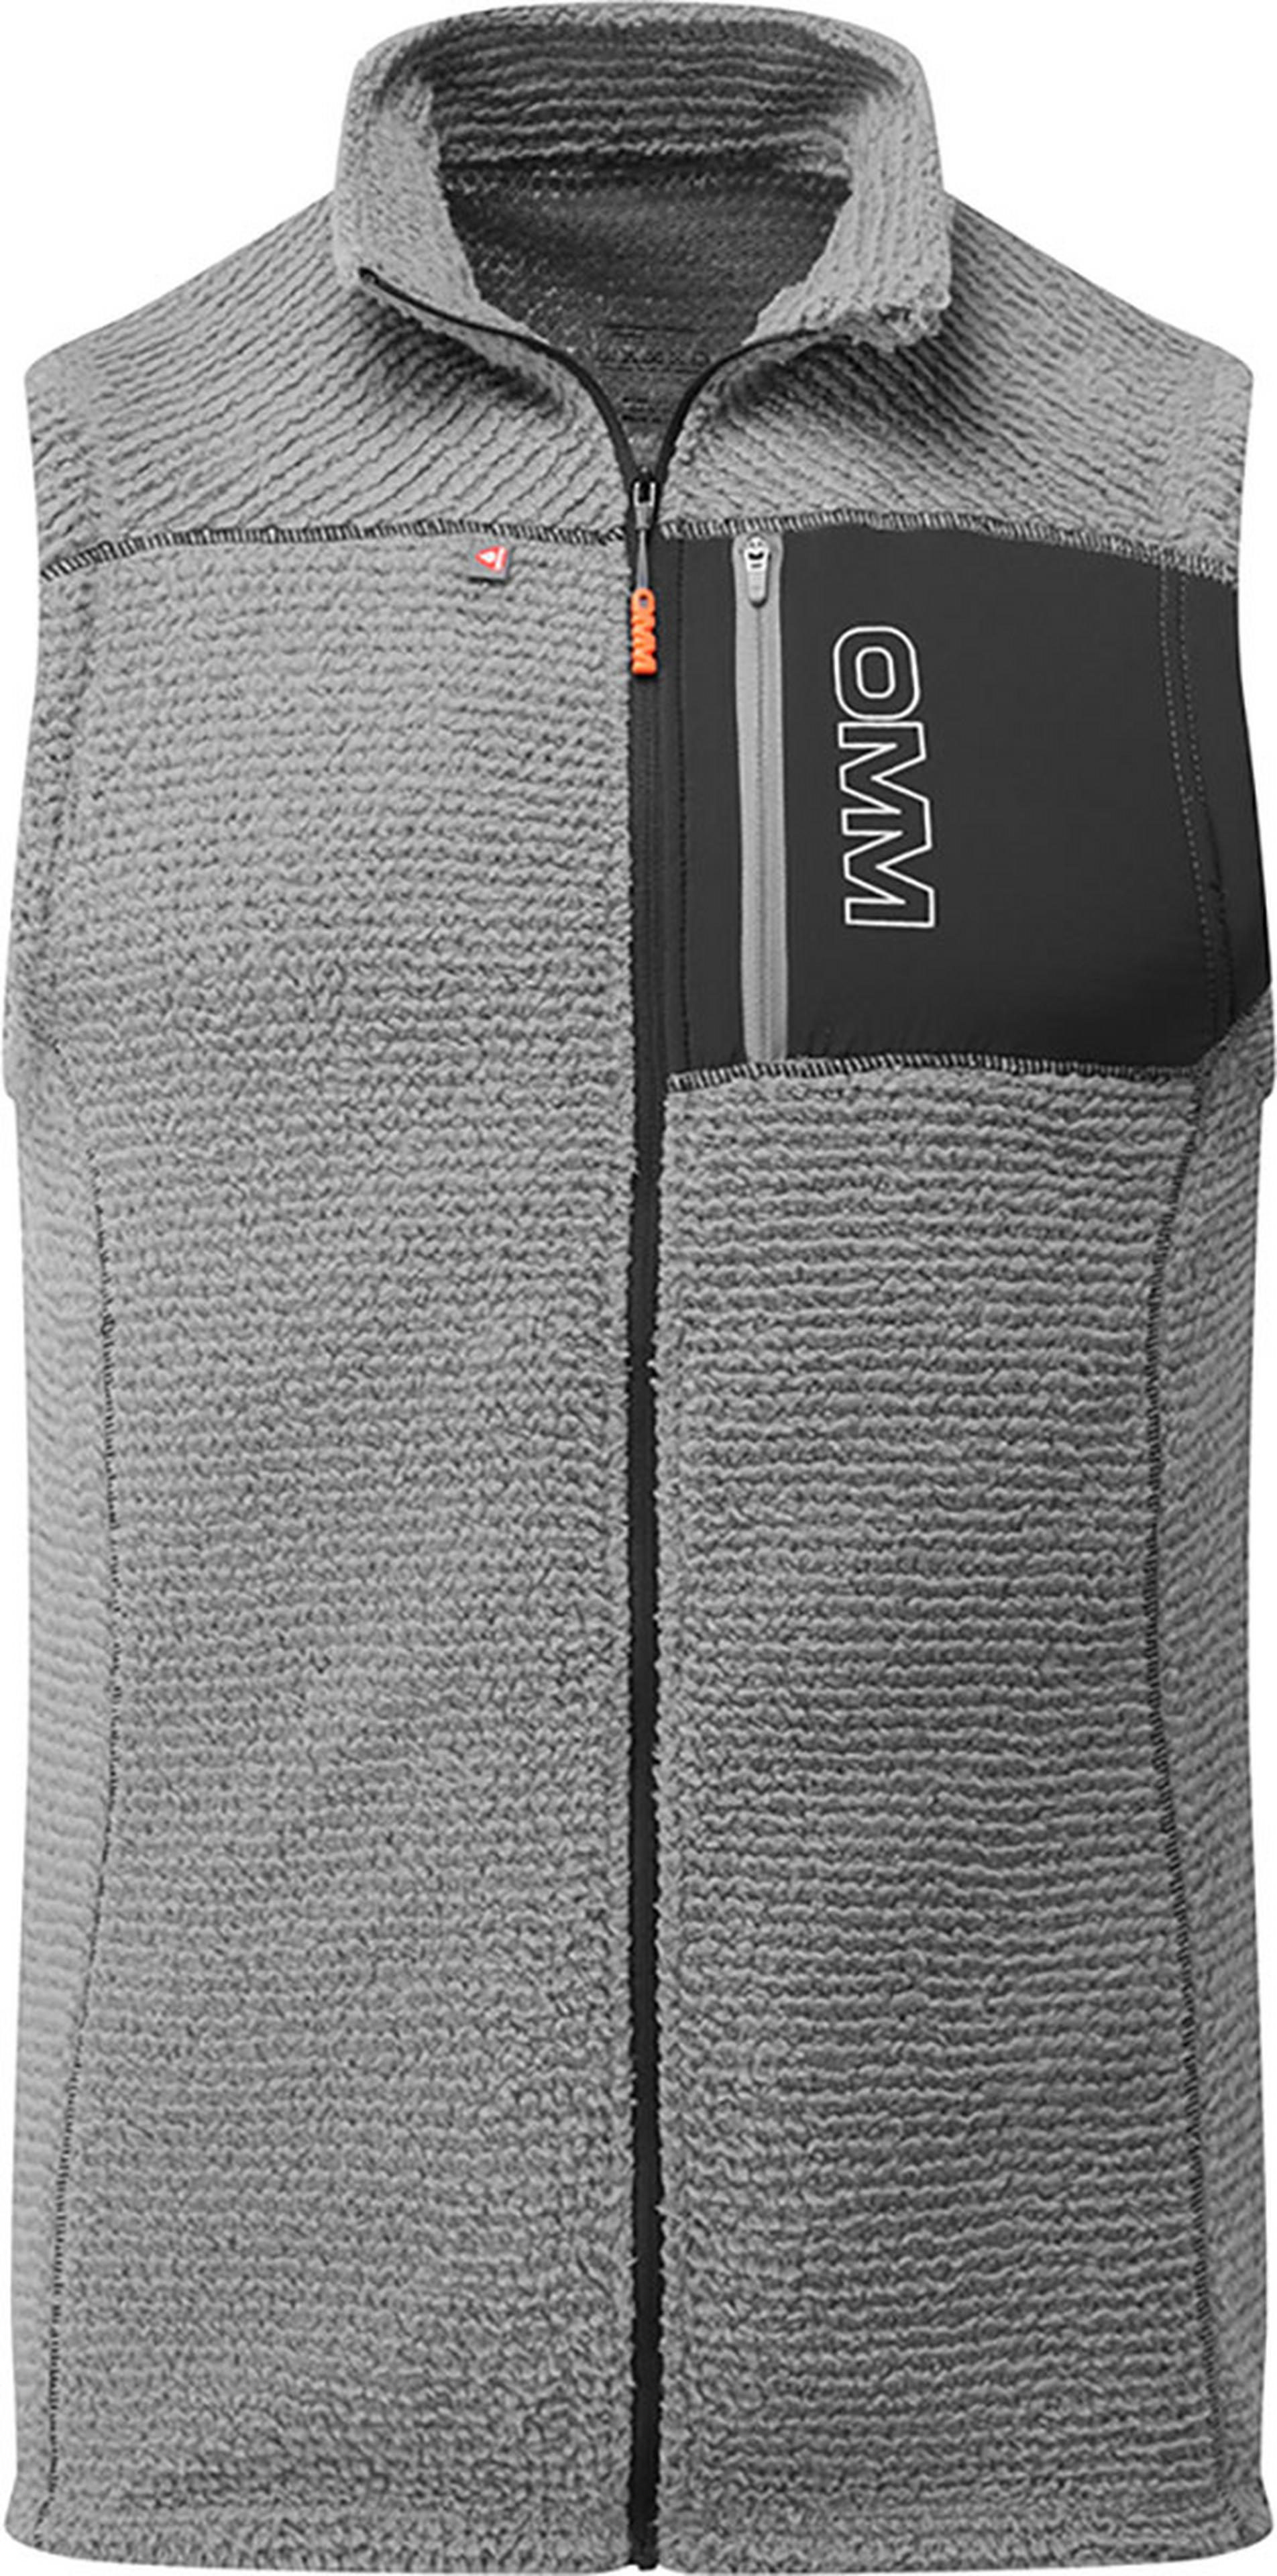 OMM Core Zipped Vest | Wiggle